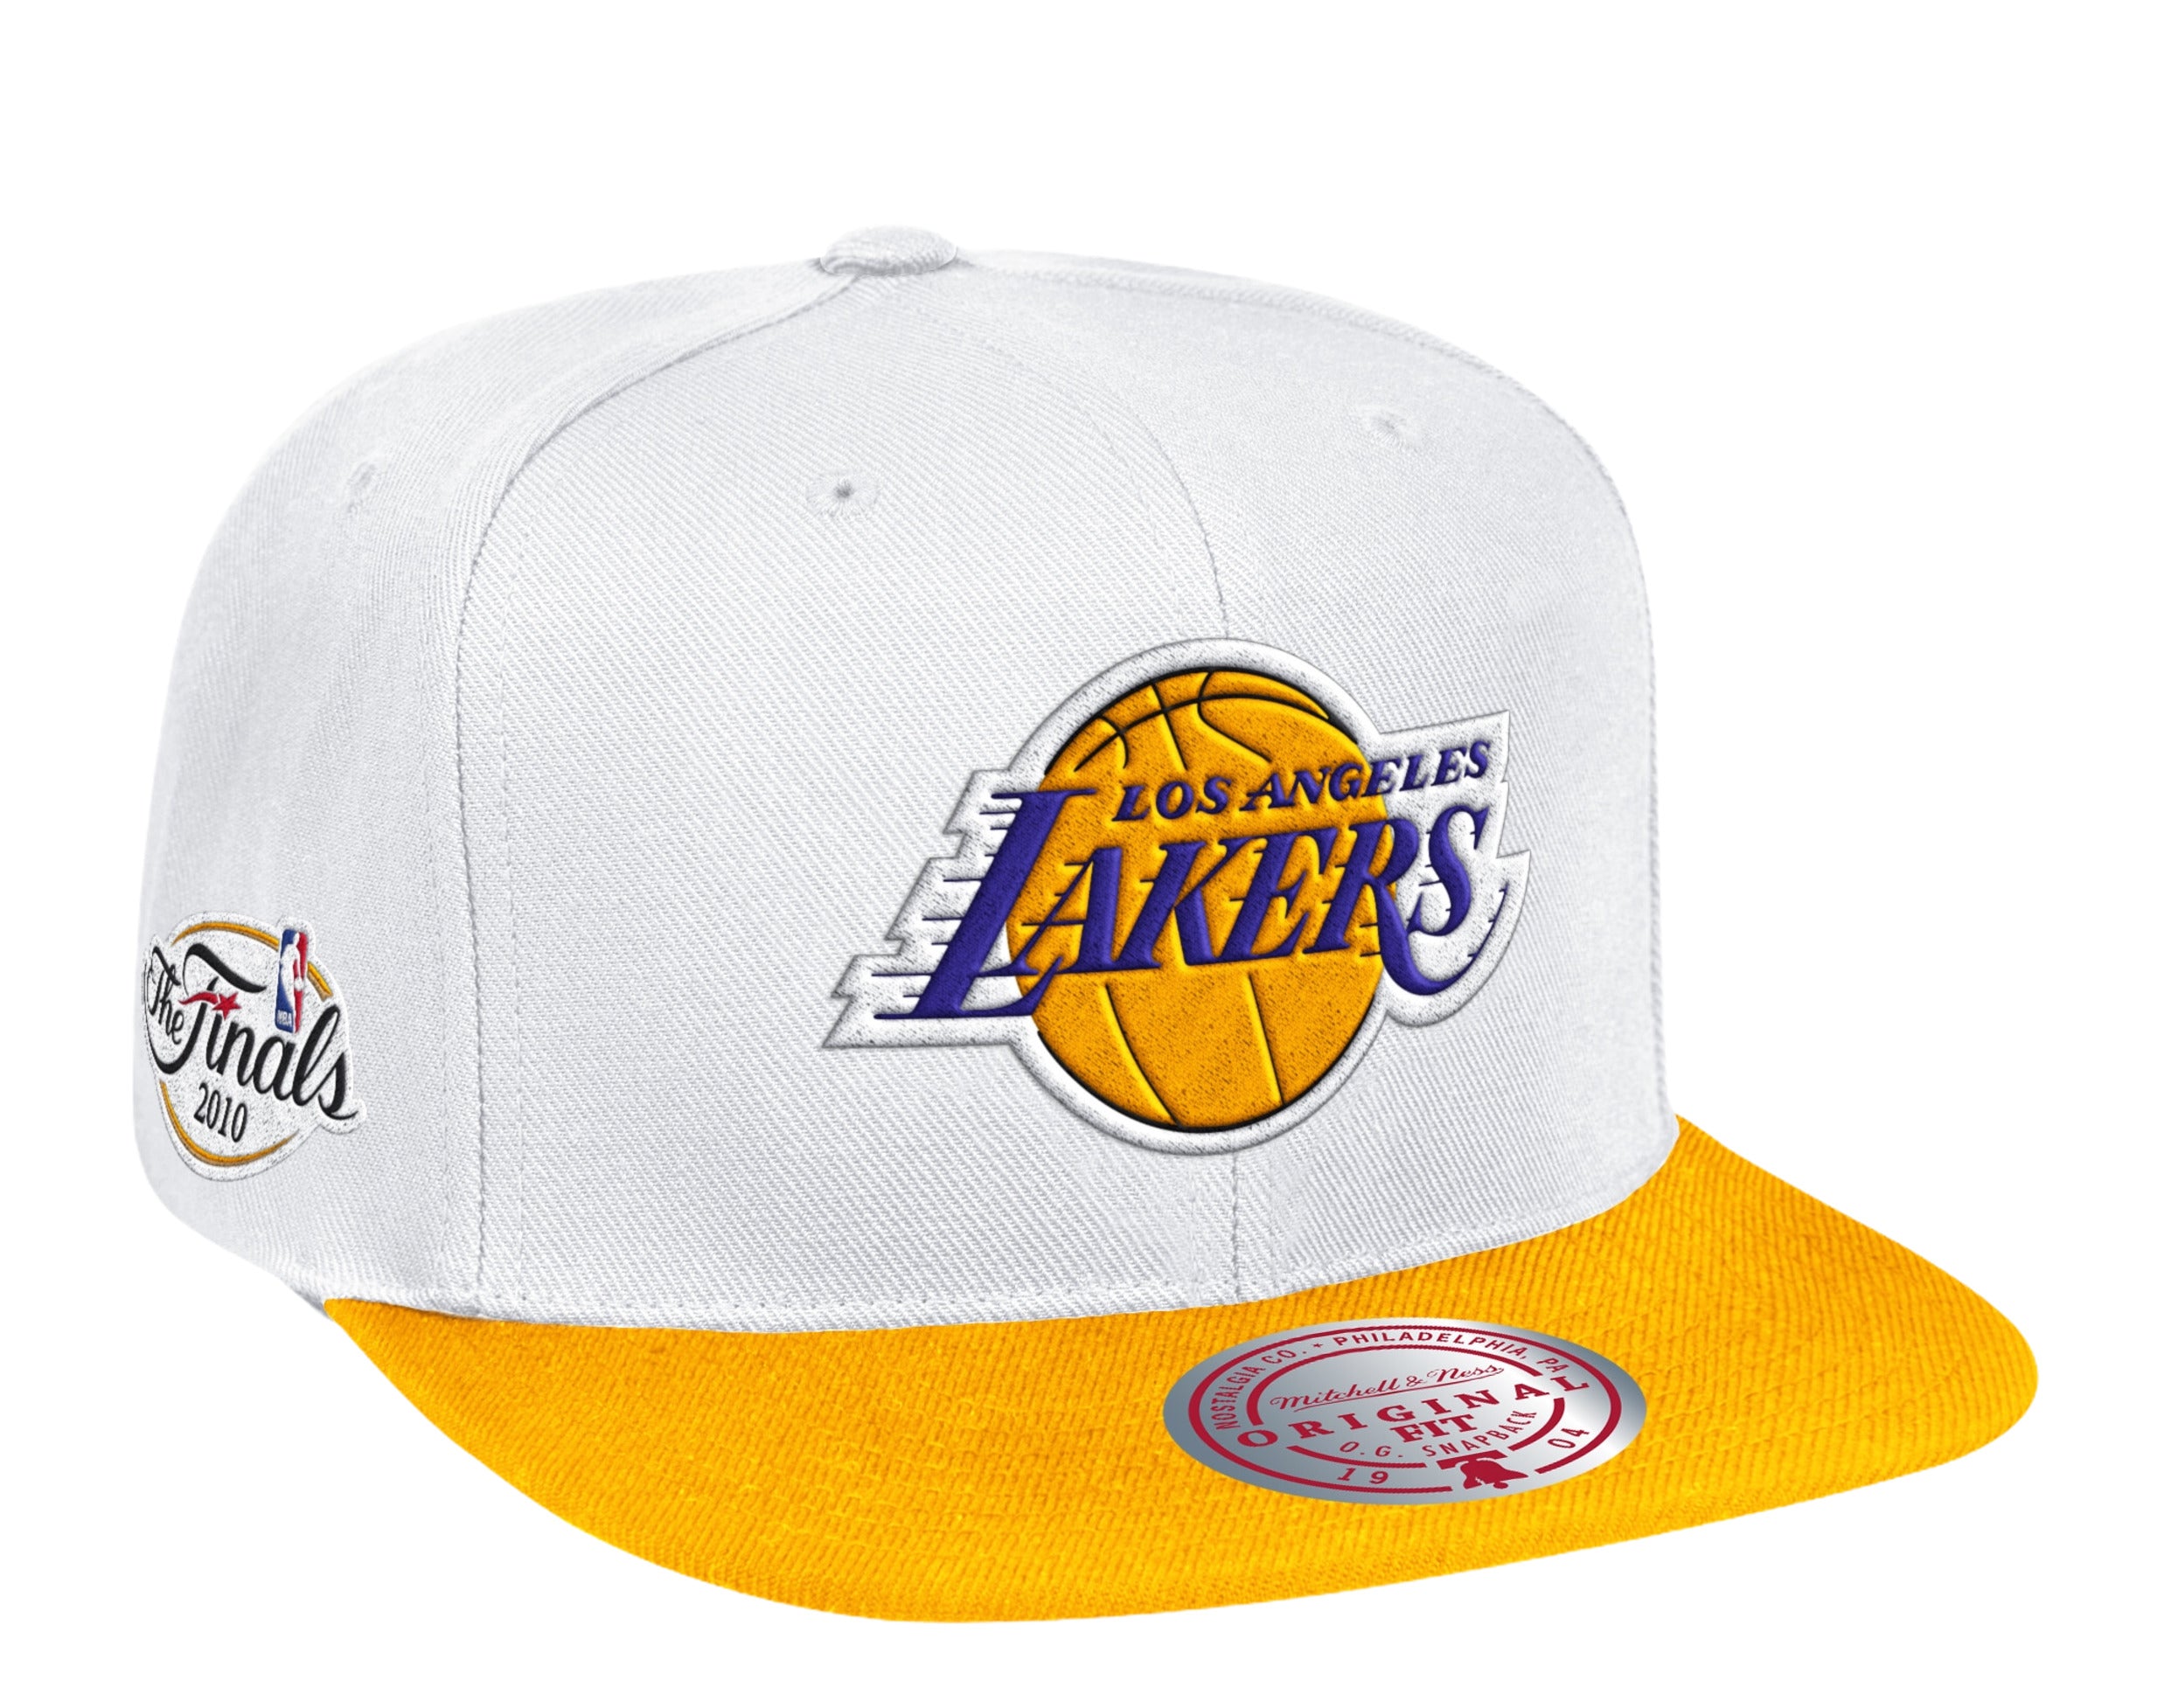 Mitchell & Ness Los Angeles Lakers NBA Champions 2010 Hardwood Classic  Snapback Hat